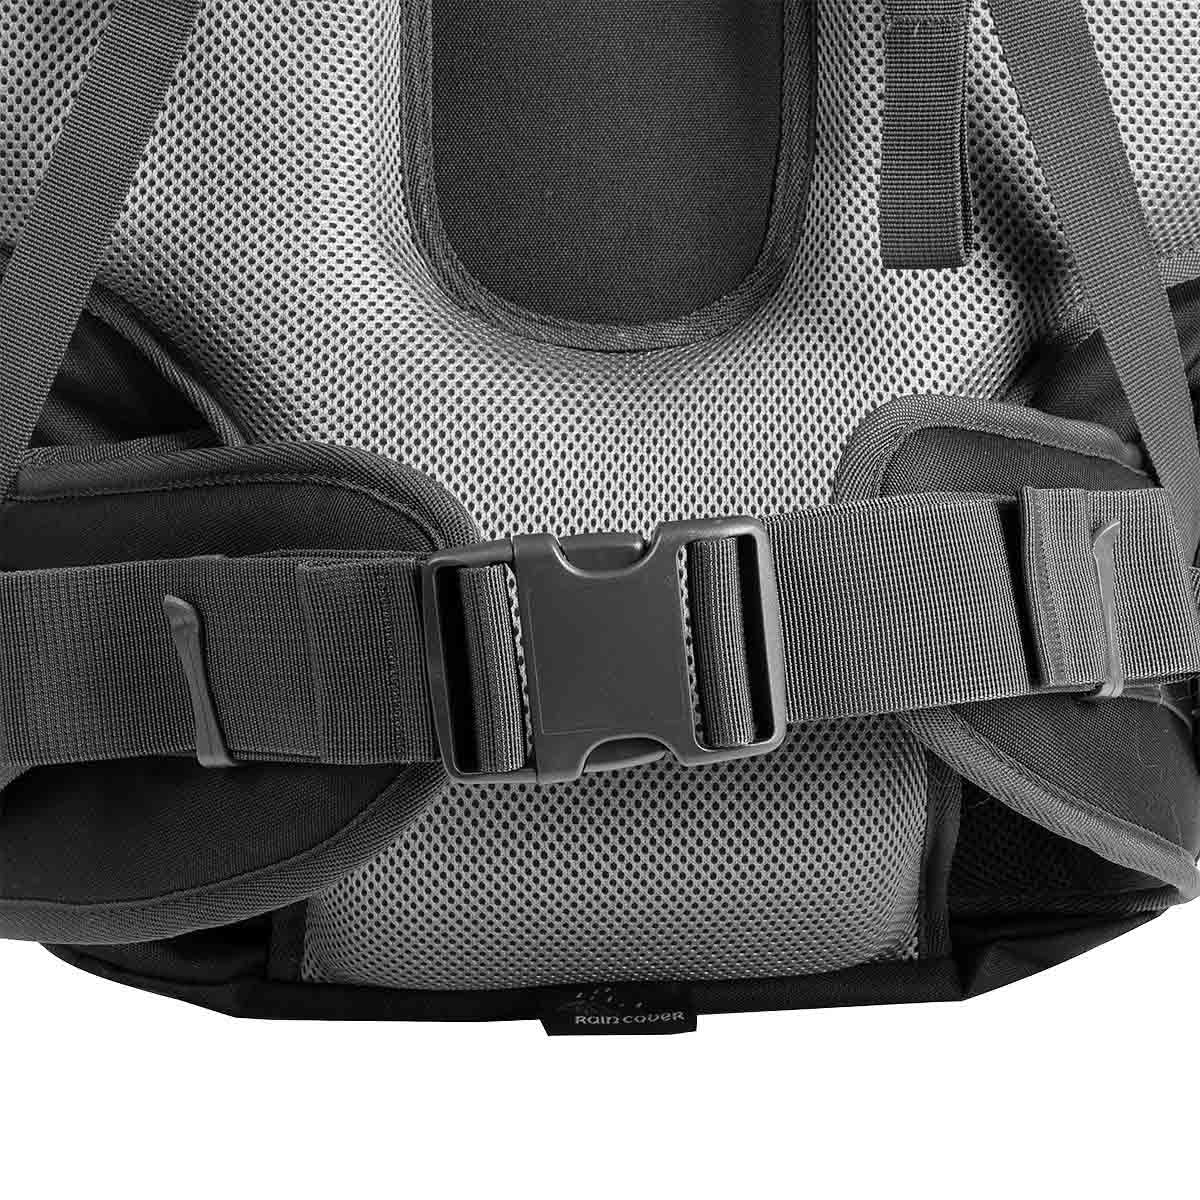 80 Liter Large Multi Day Framed Backpack for Hiking with Height-Adjustable Back